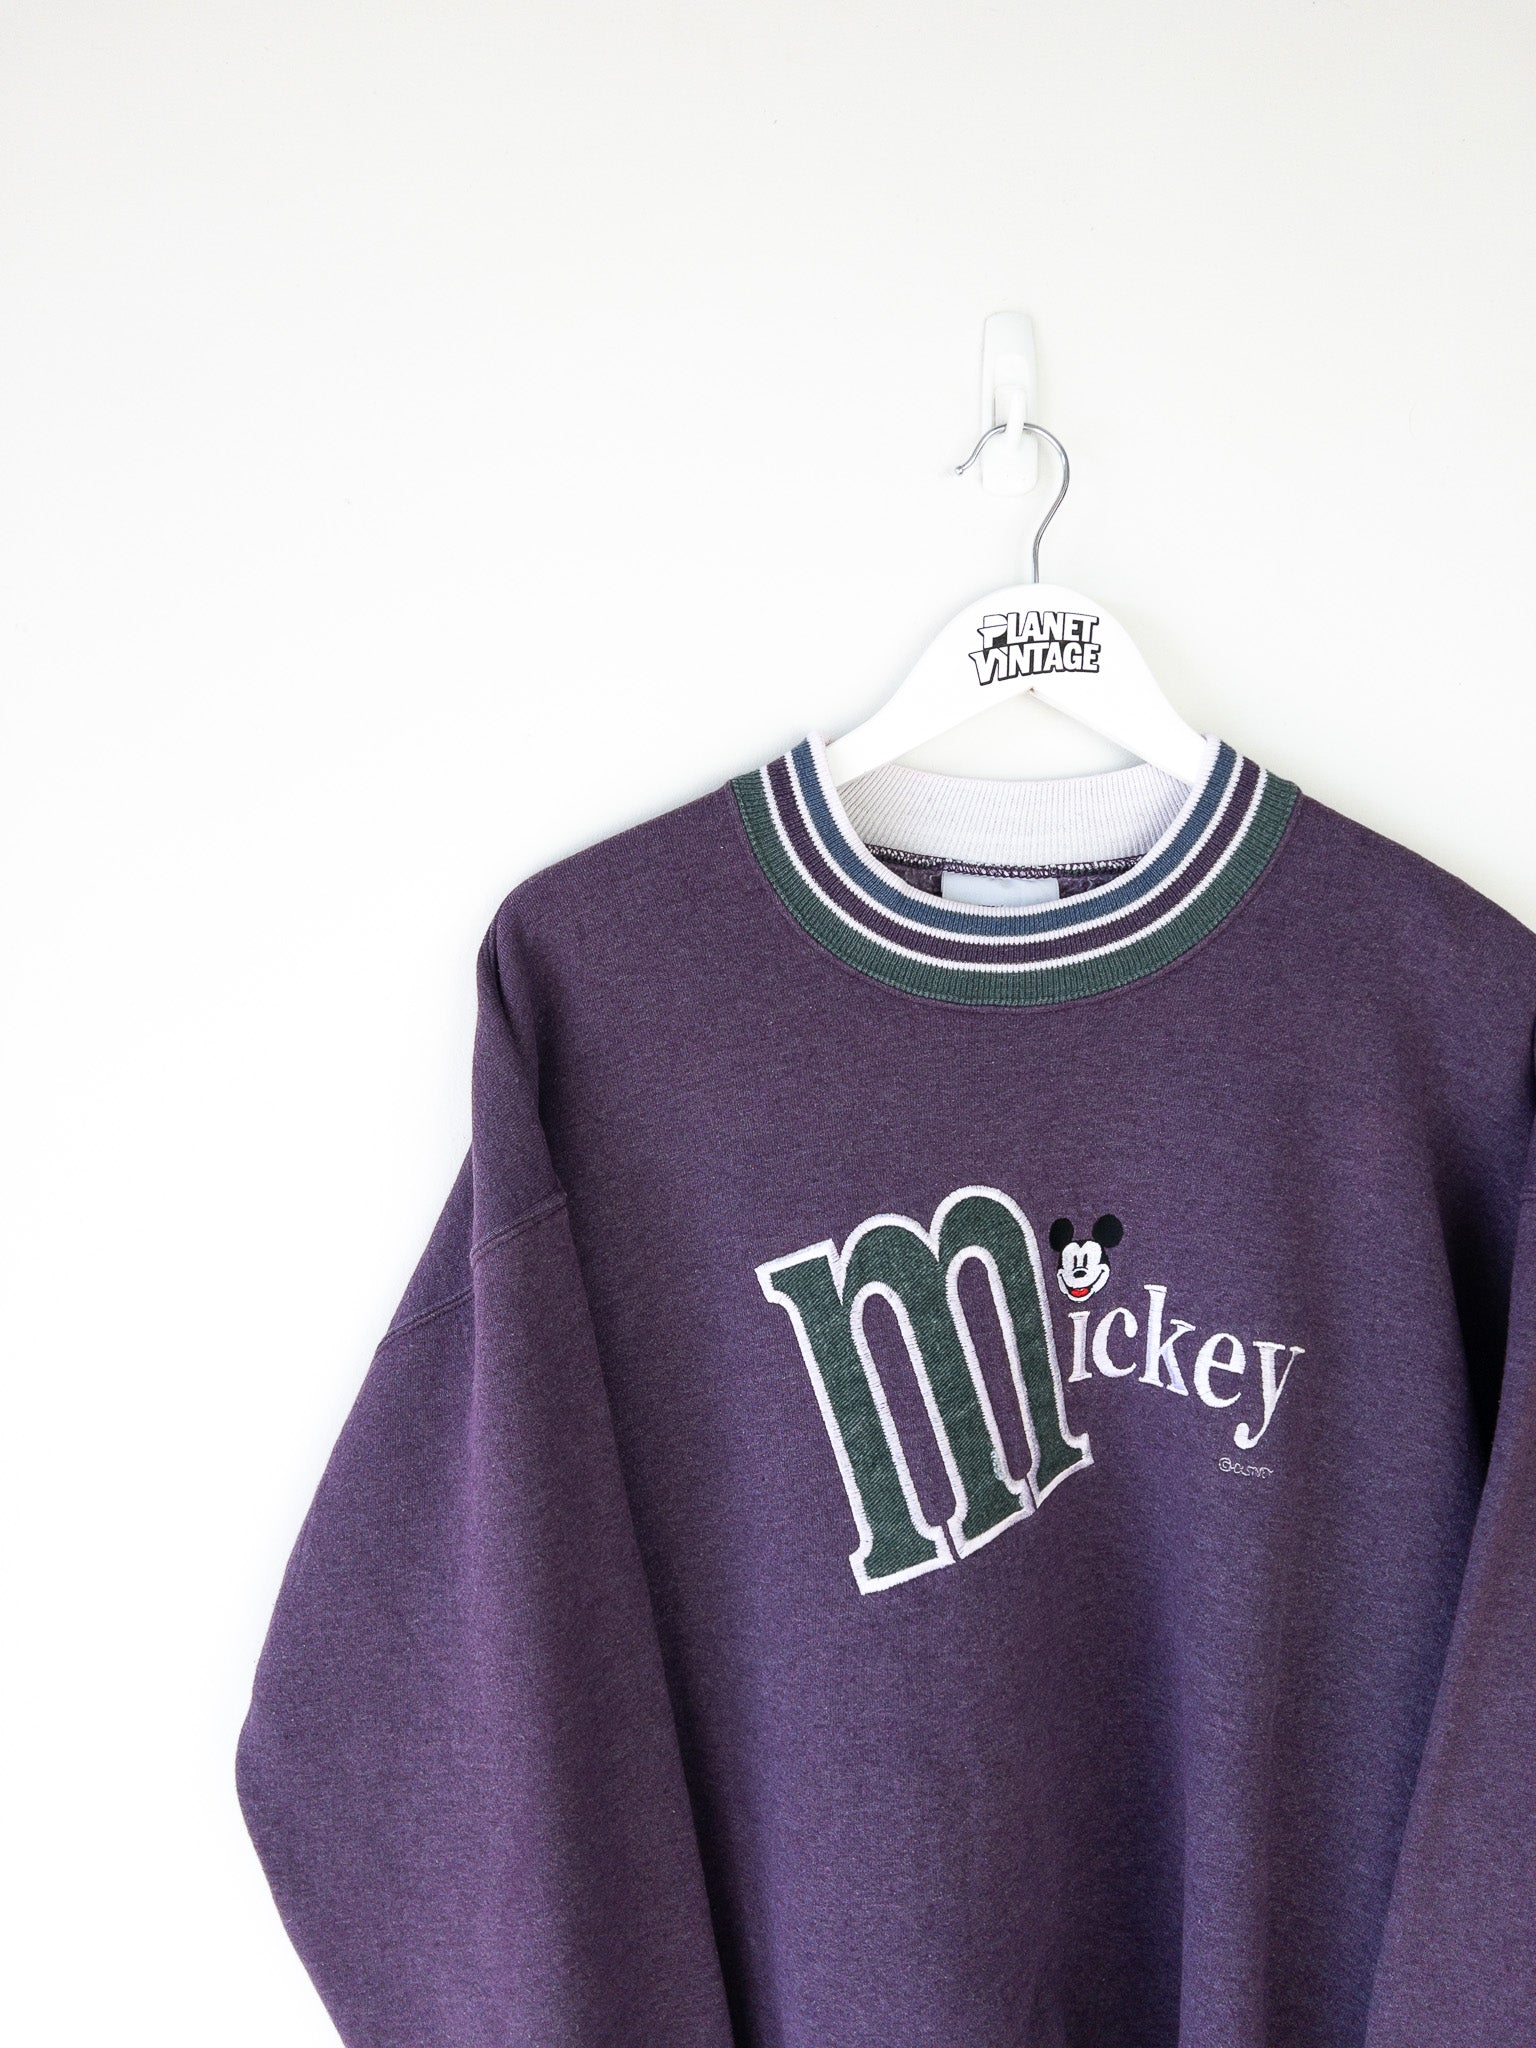 Vintage Mickey Sweatshirt (XL)